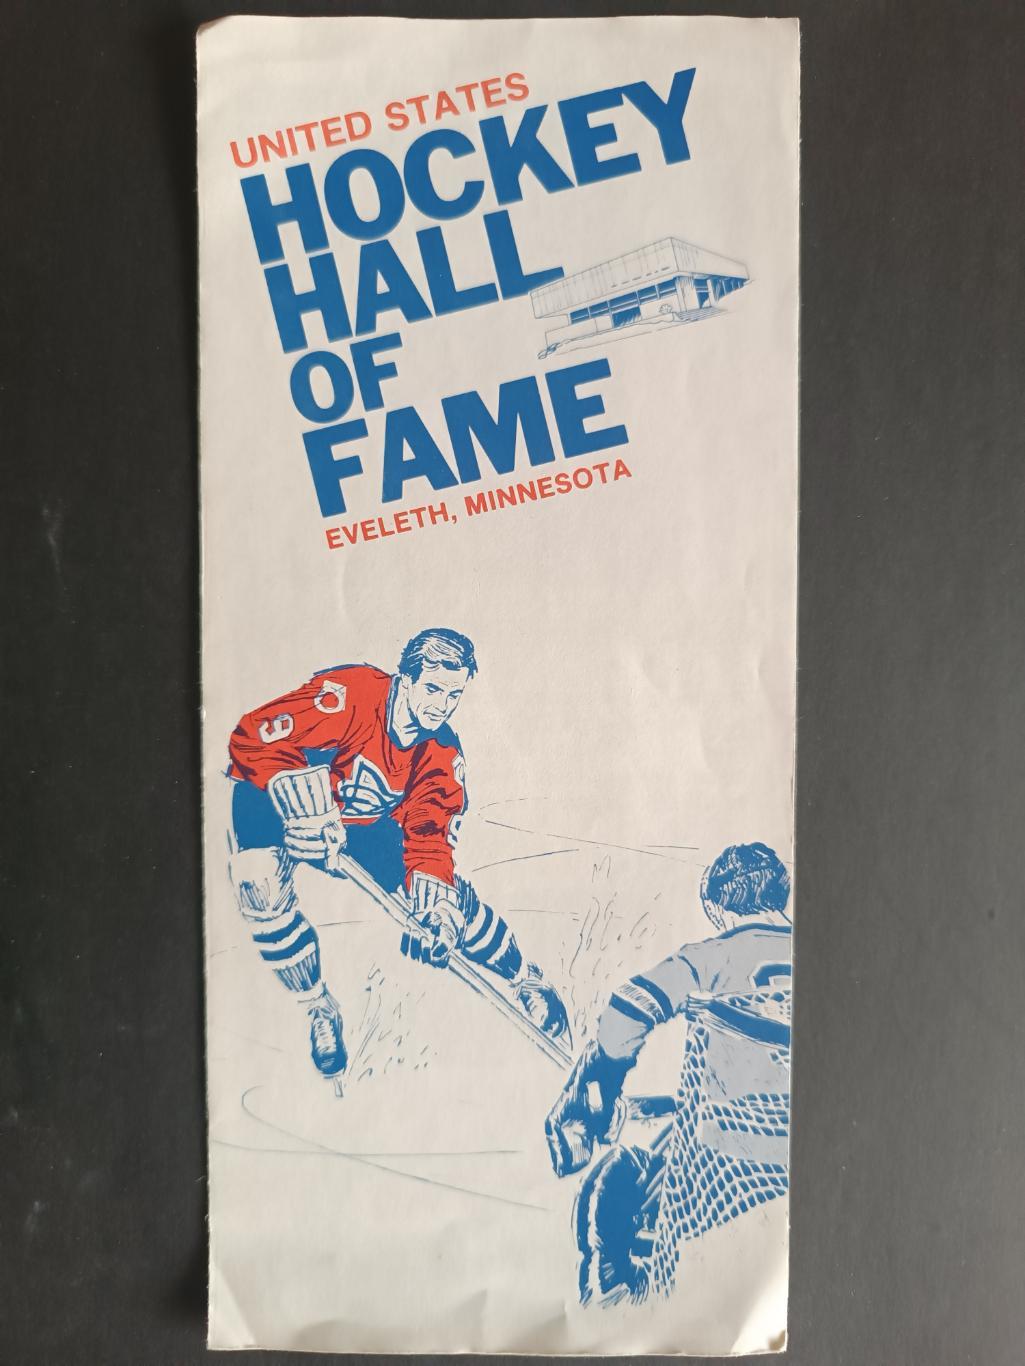 ХОККЕЙ БУКЛЕТ СУВЕНИР ЗАЛ СЛАВЫ ЭВЕЛЕТ 1975 NHL HALL OF FAME EVELETH MINNESOTA